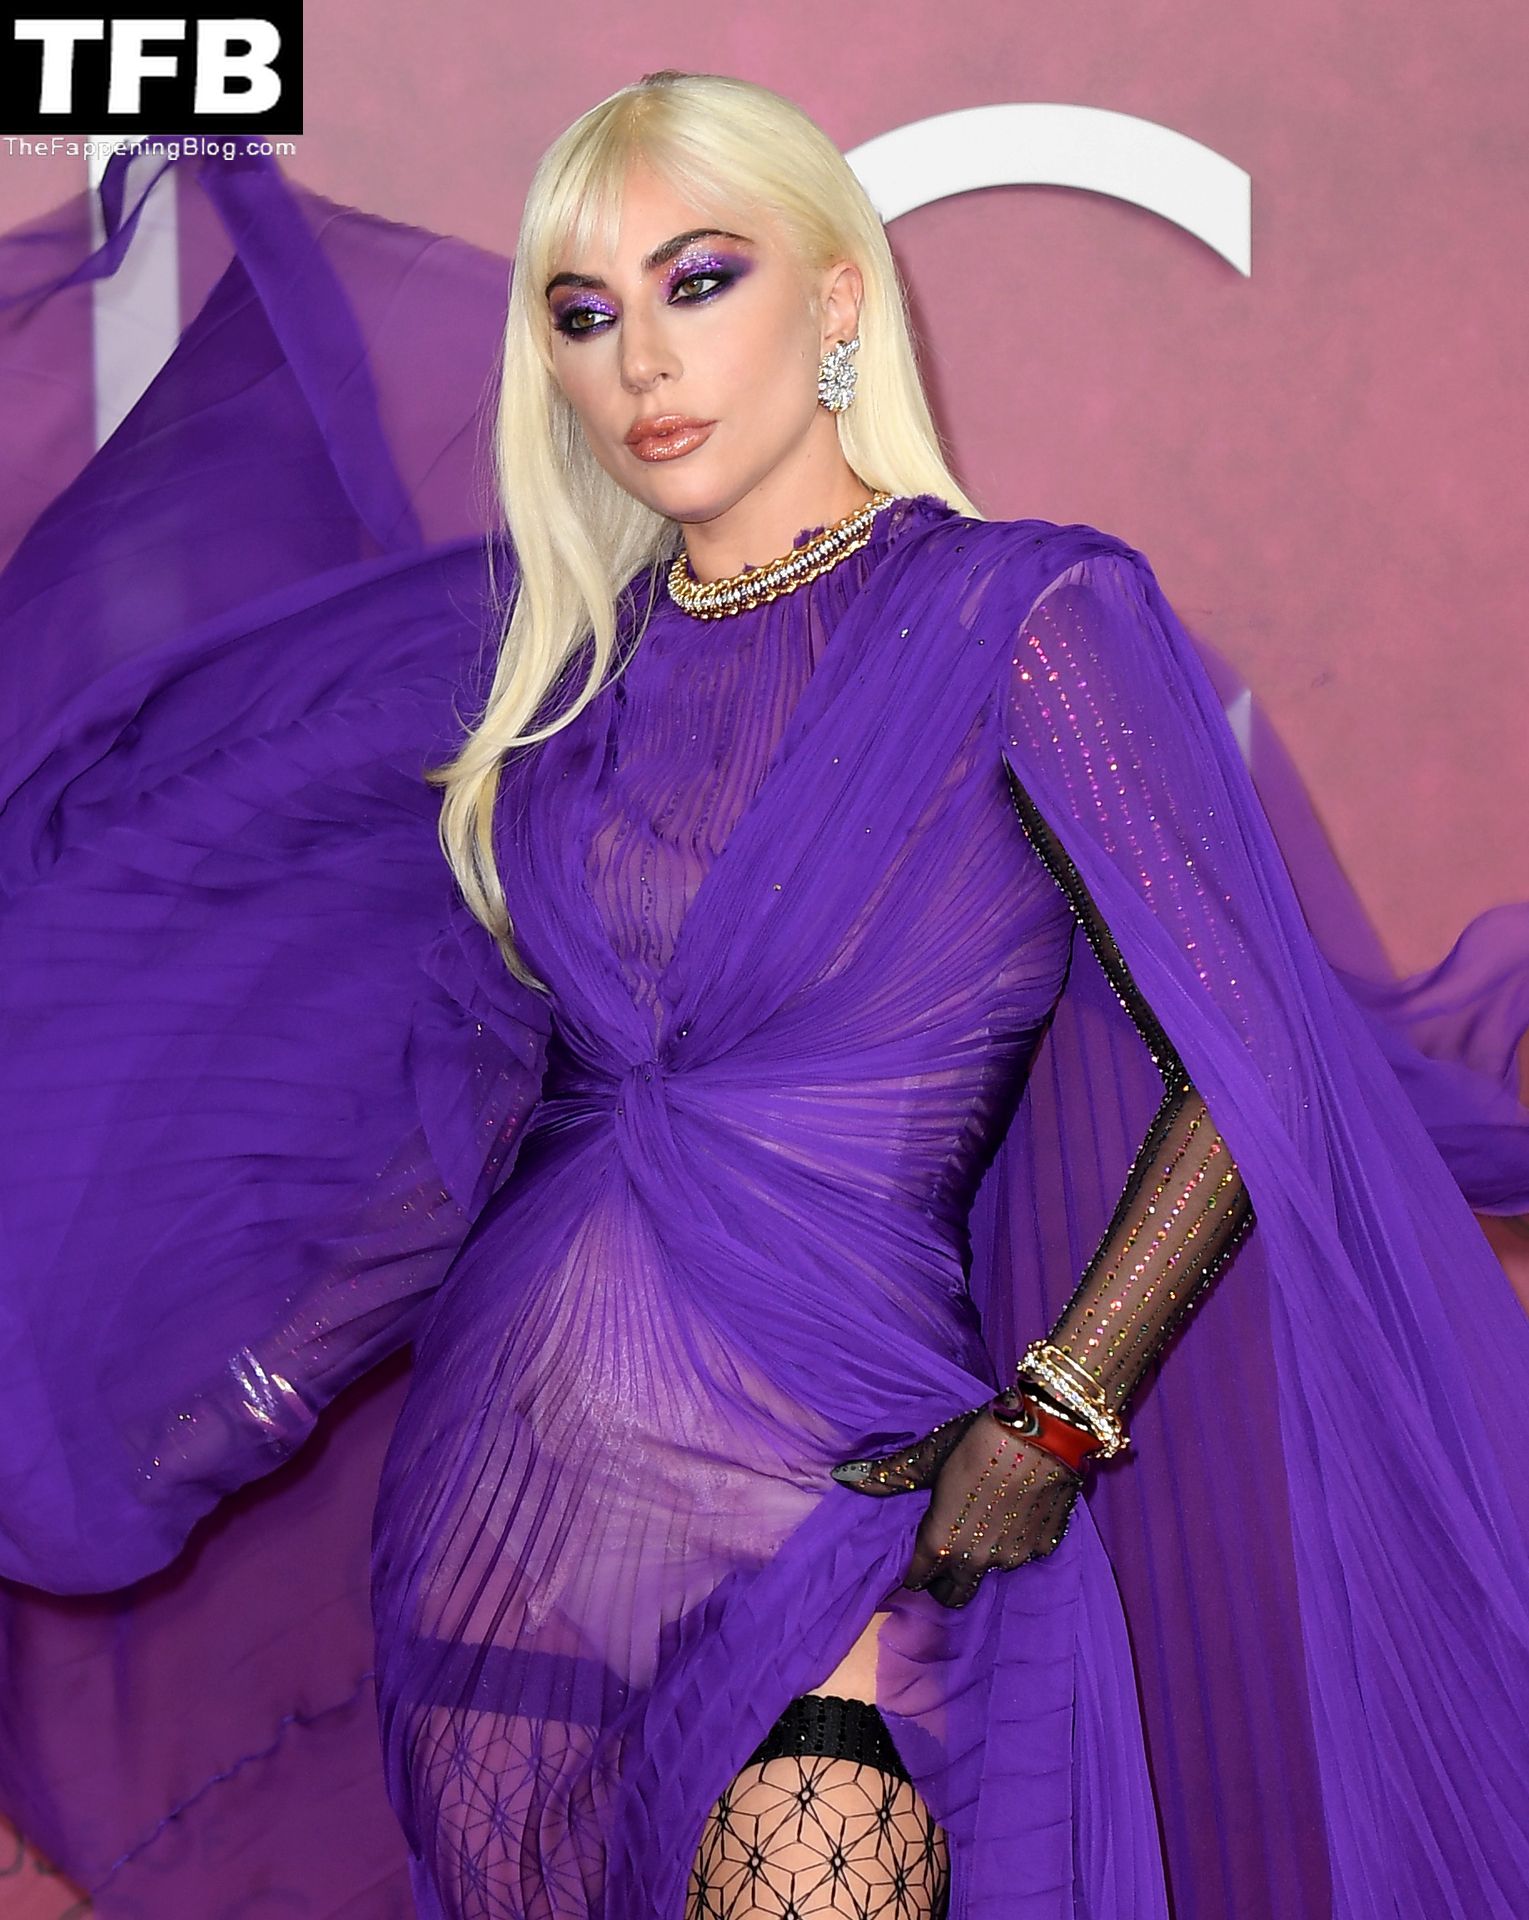 Lady-Gaga-Sexy-The-Fappening-Blog-111.jpg